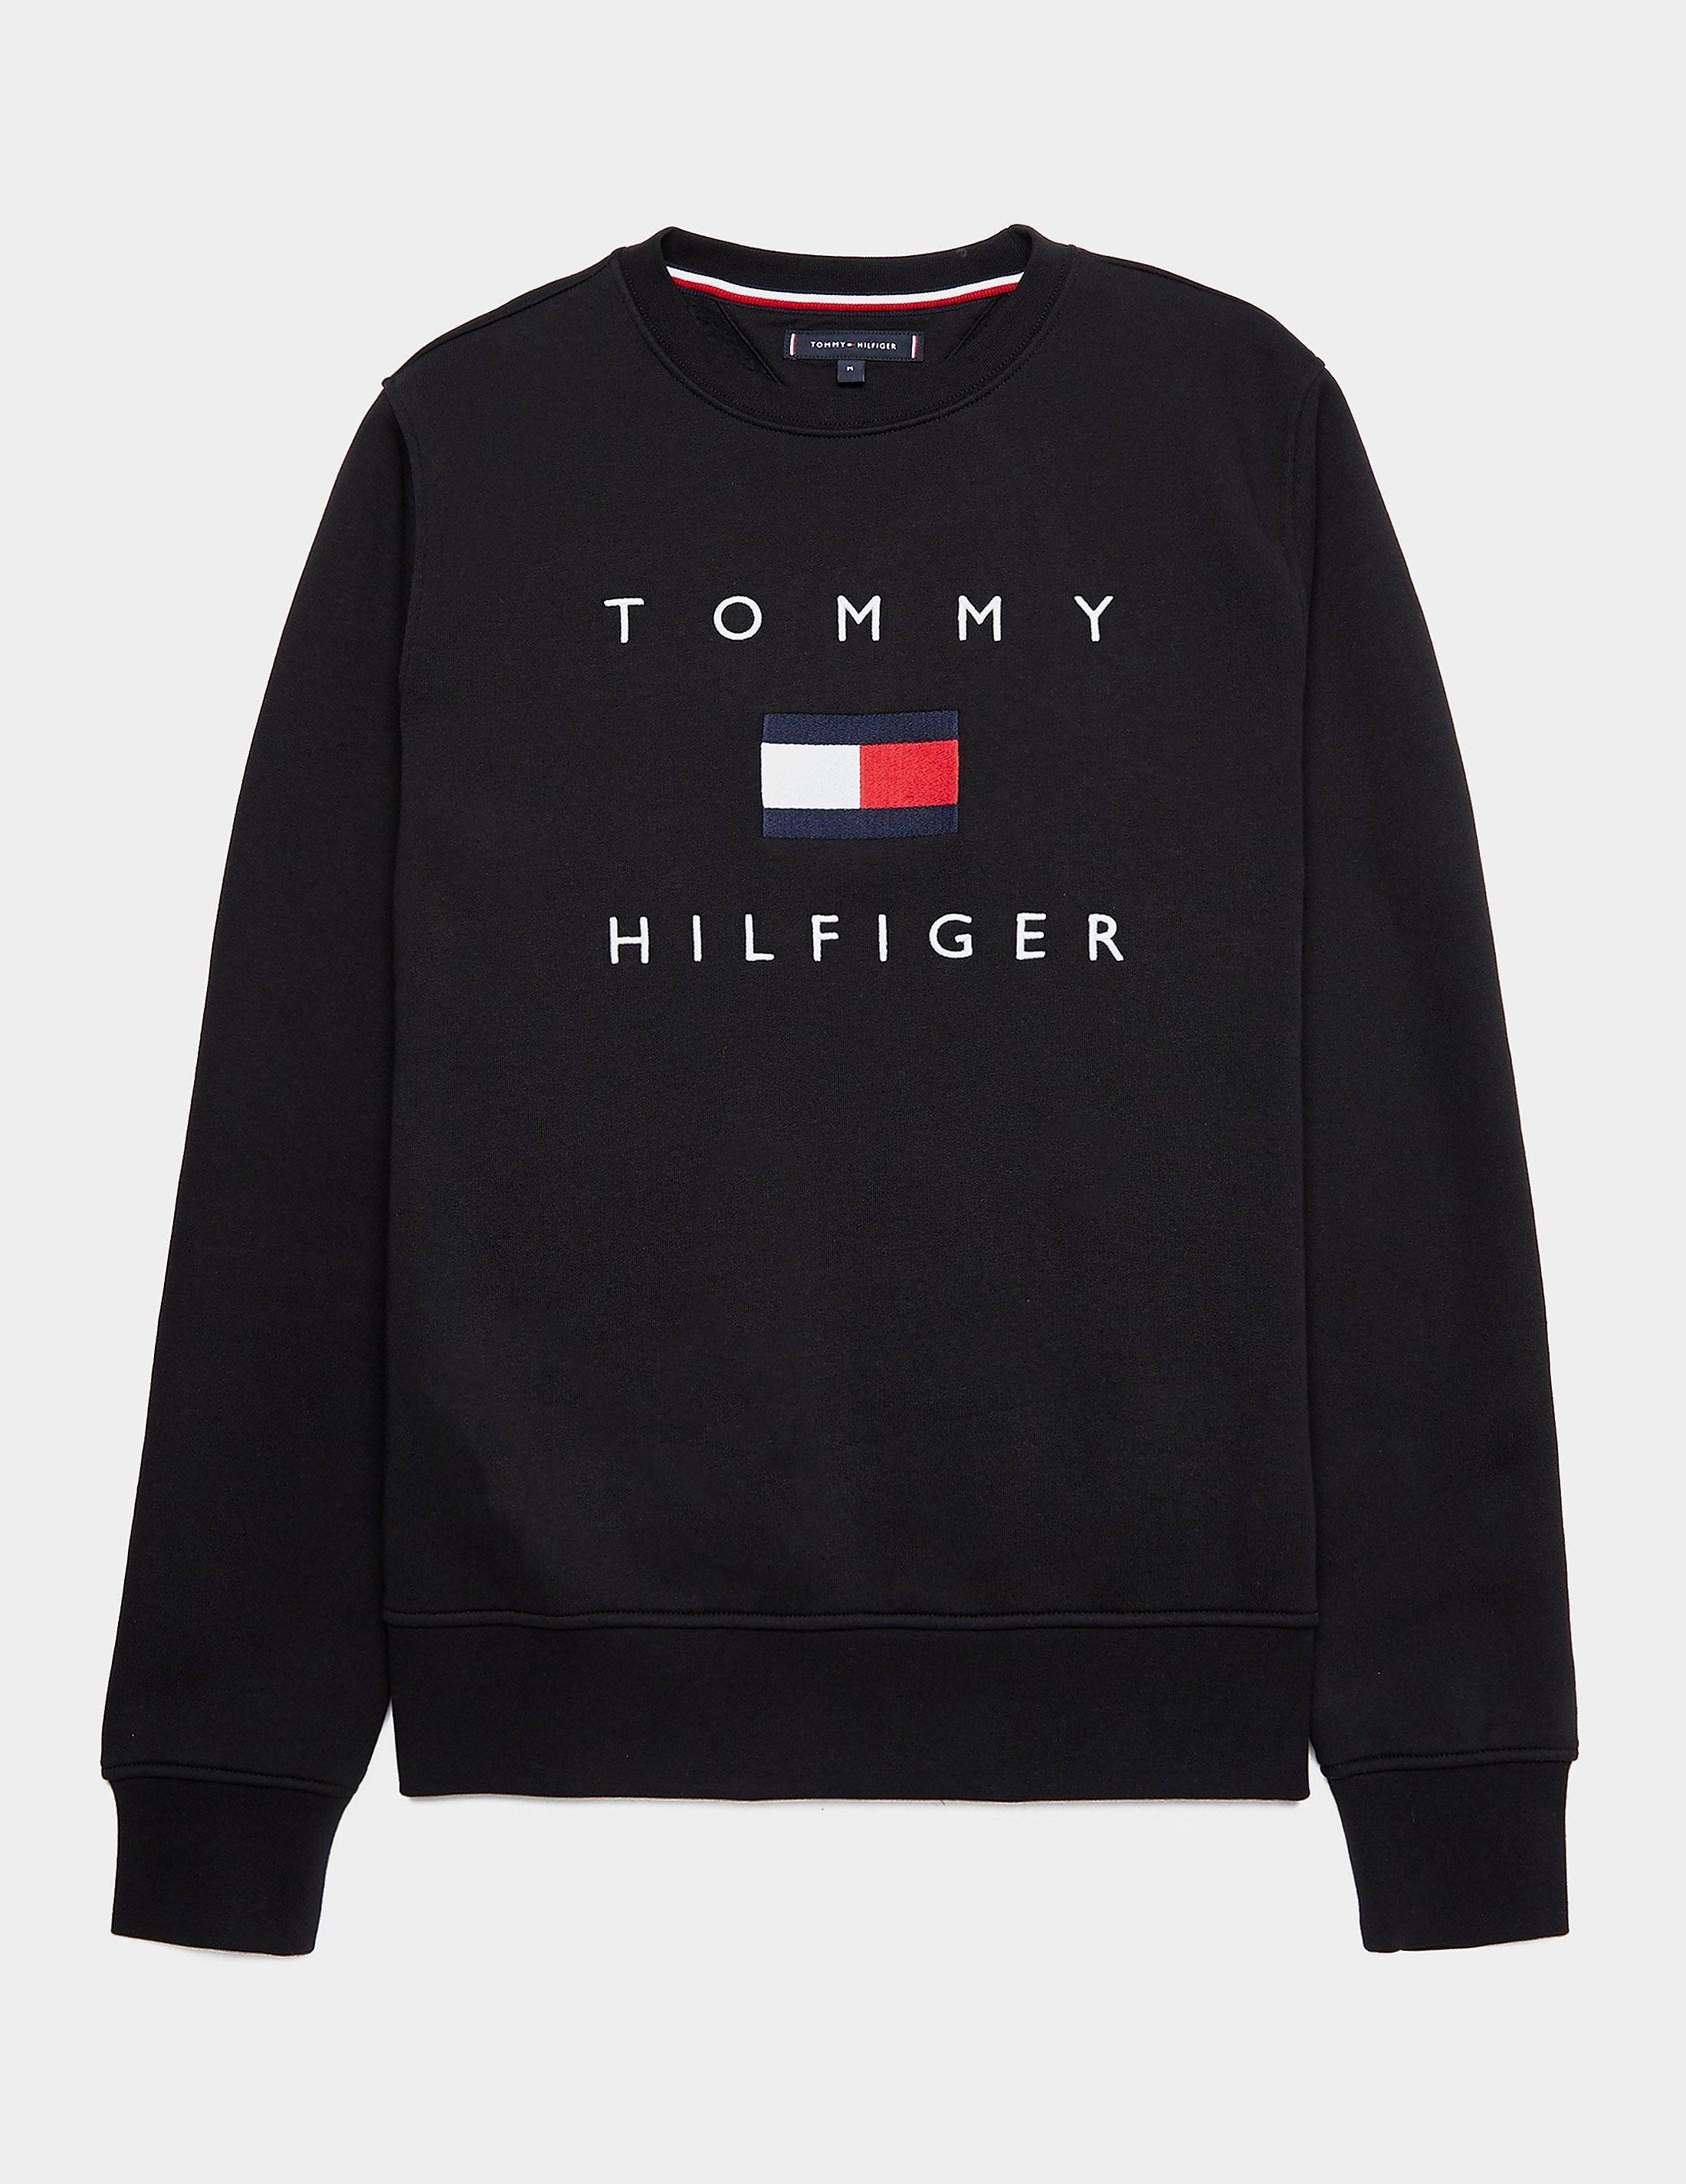 Tommy Hilfiger Cotton Tommy Flag Sweatshirt in Black/Black (Black) - Lyst